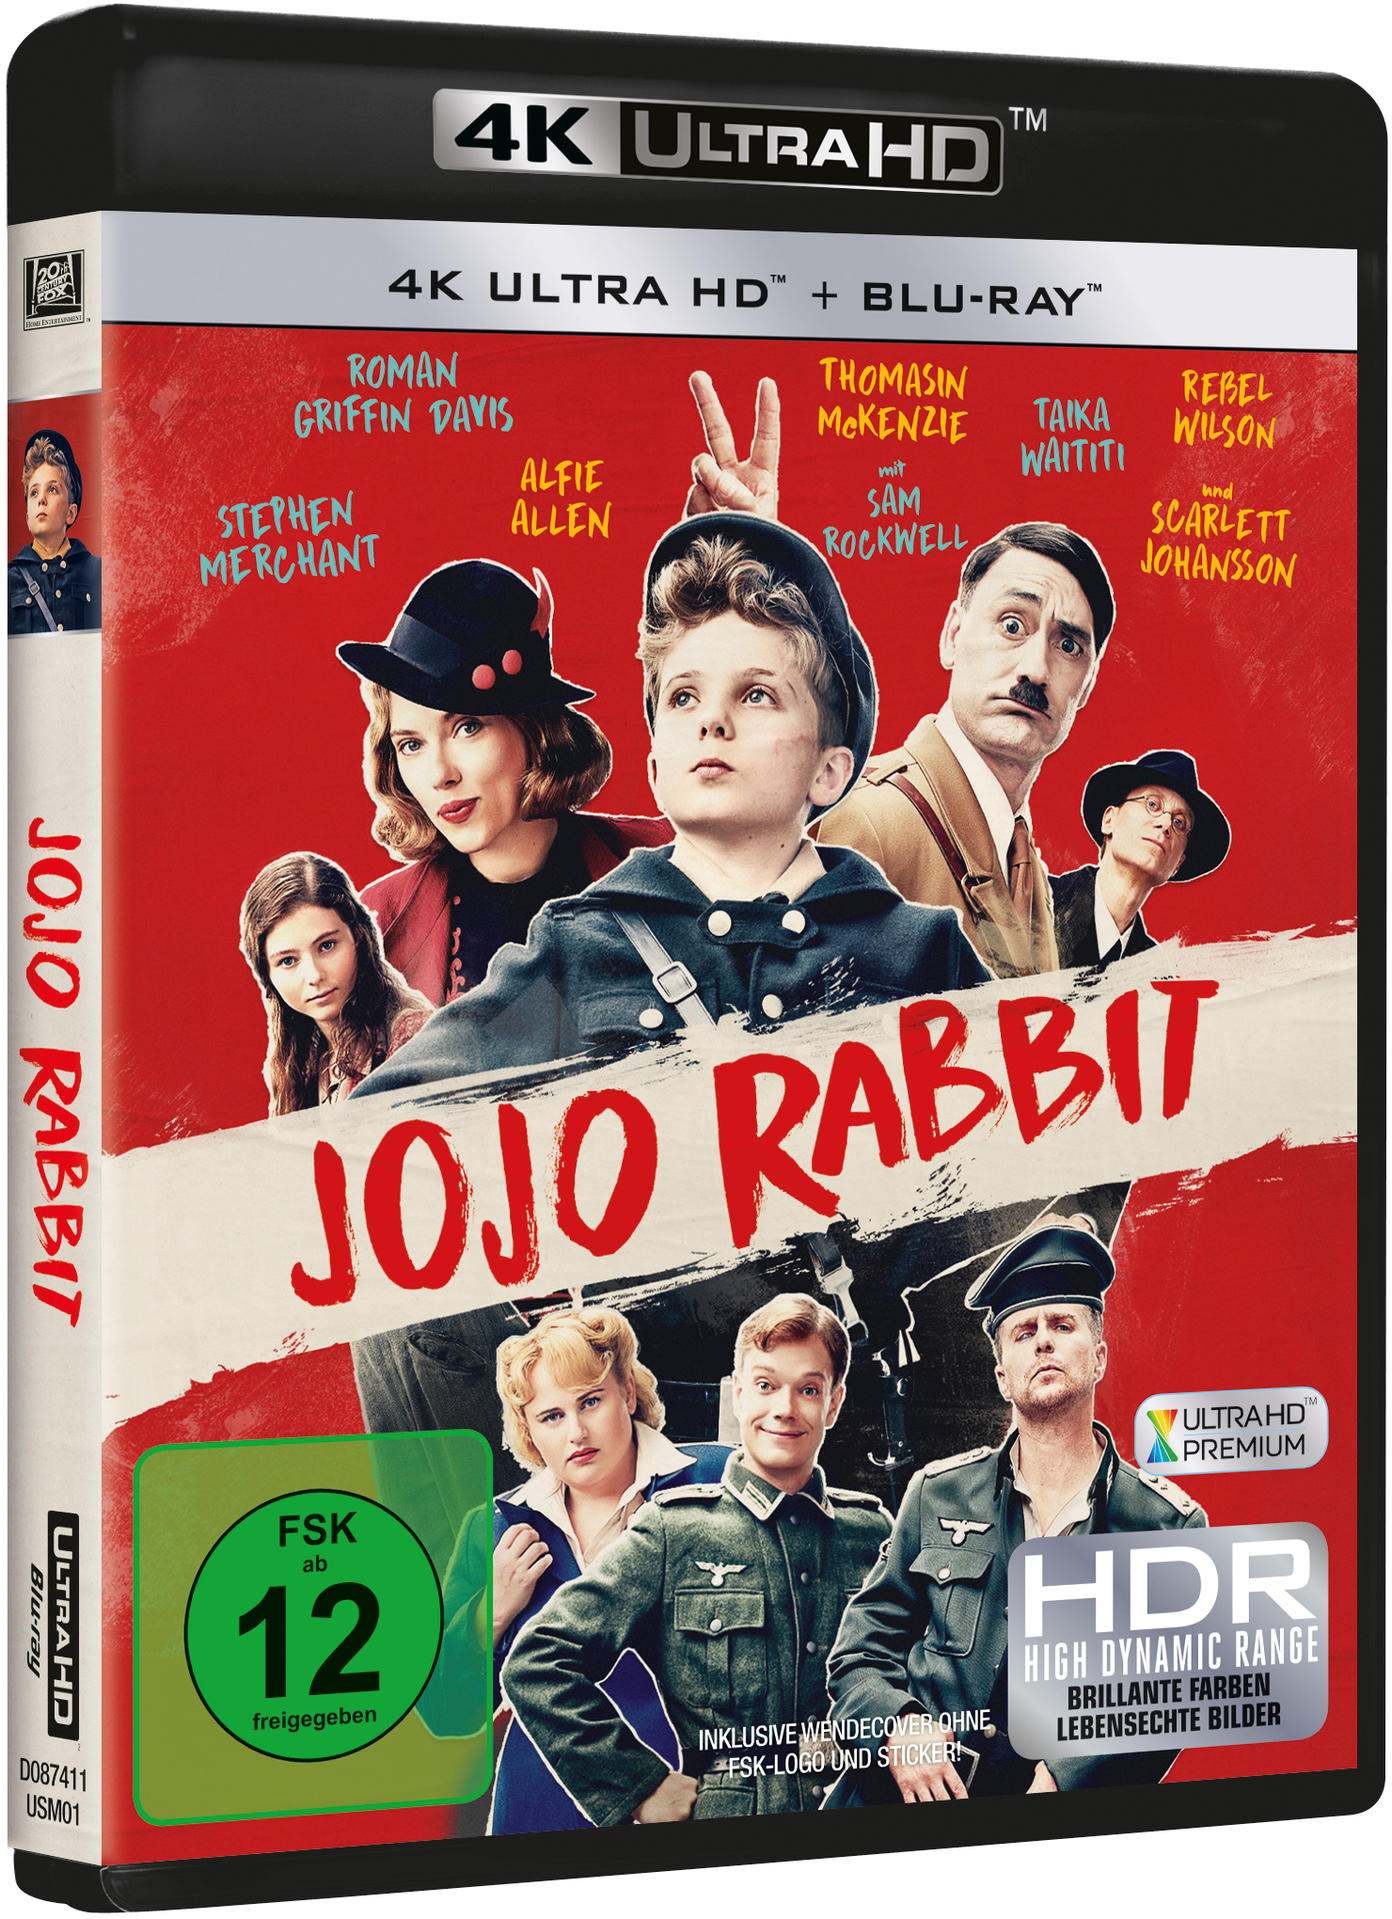 HD Blu-ray + Rabbit Ultra Jojo Blu-ray 4K